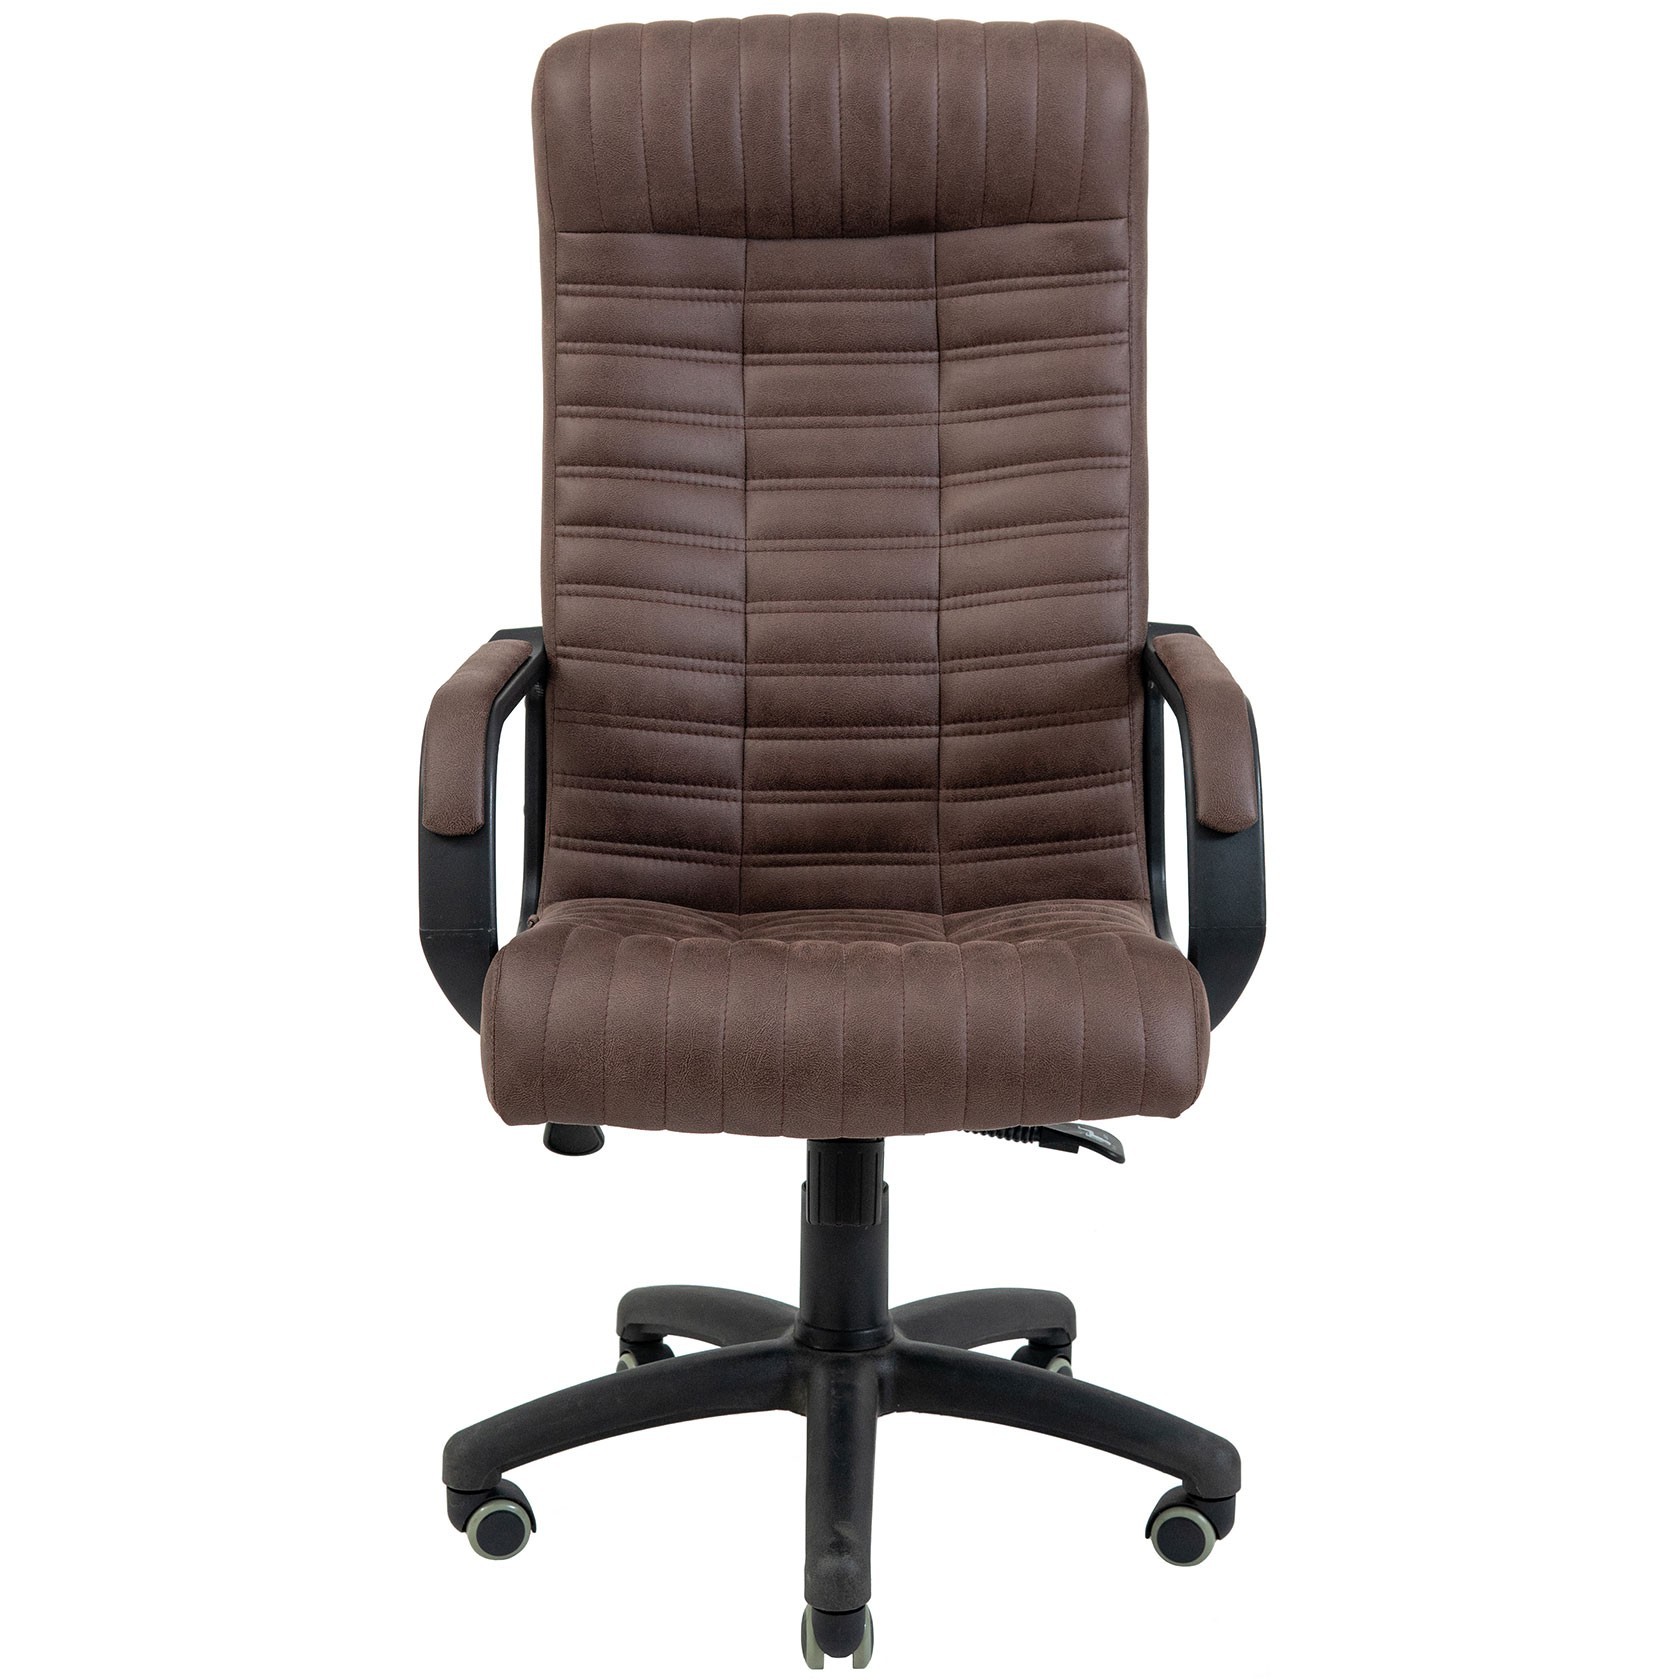 Компьютерное кресло Rondi Орион pl для руководителя